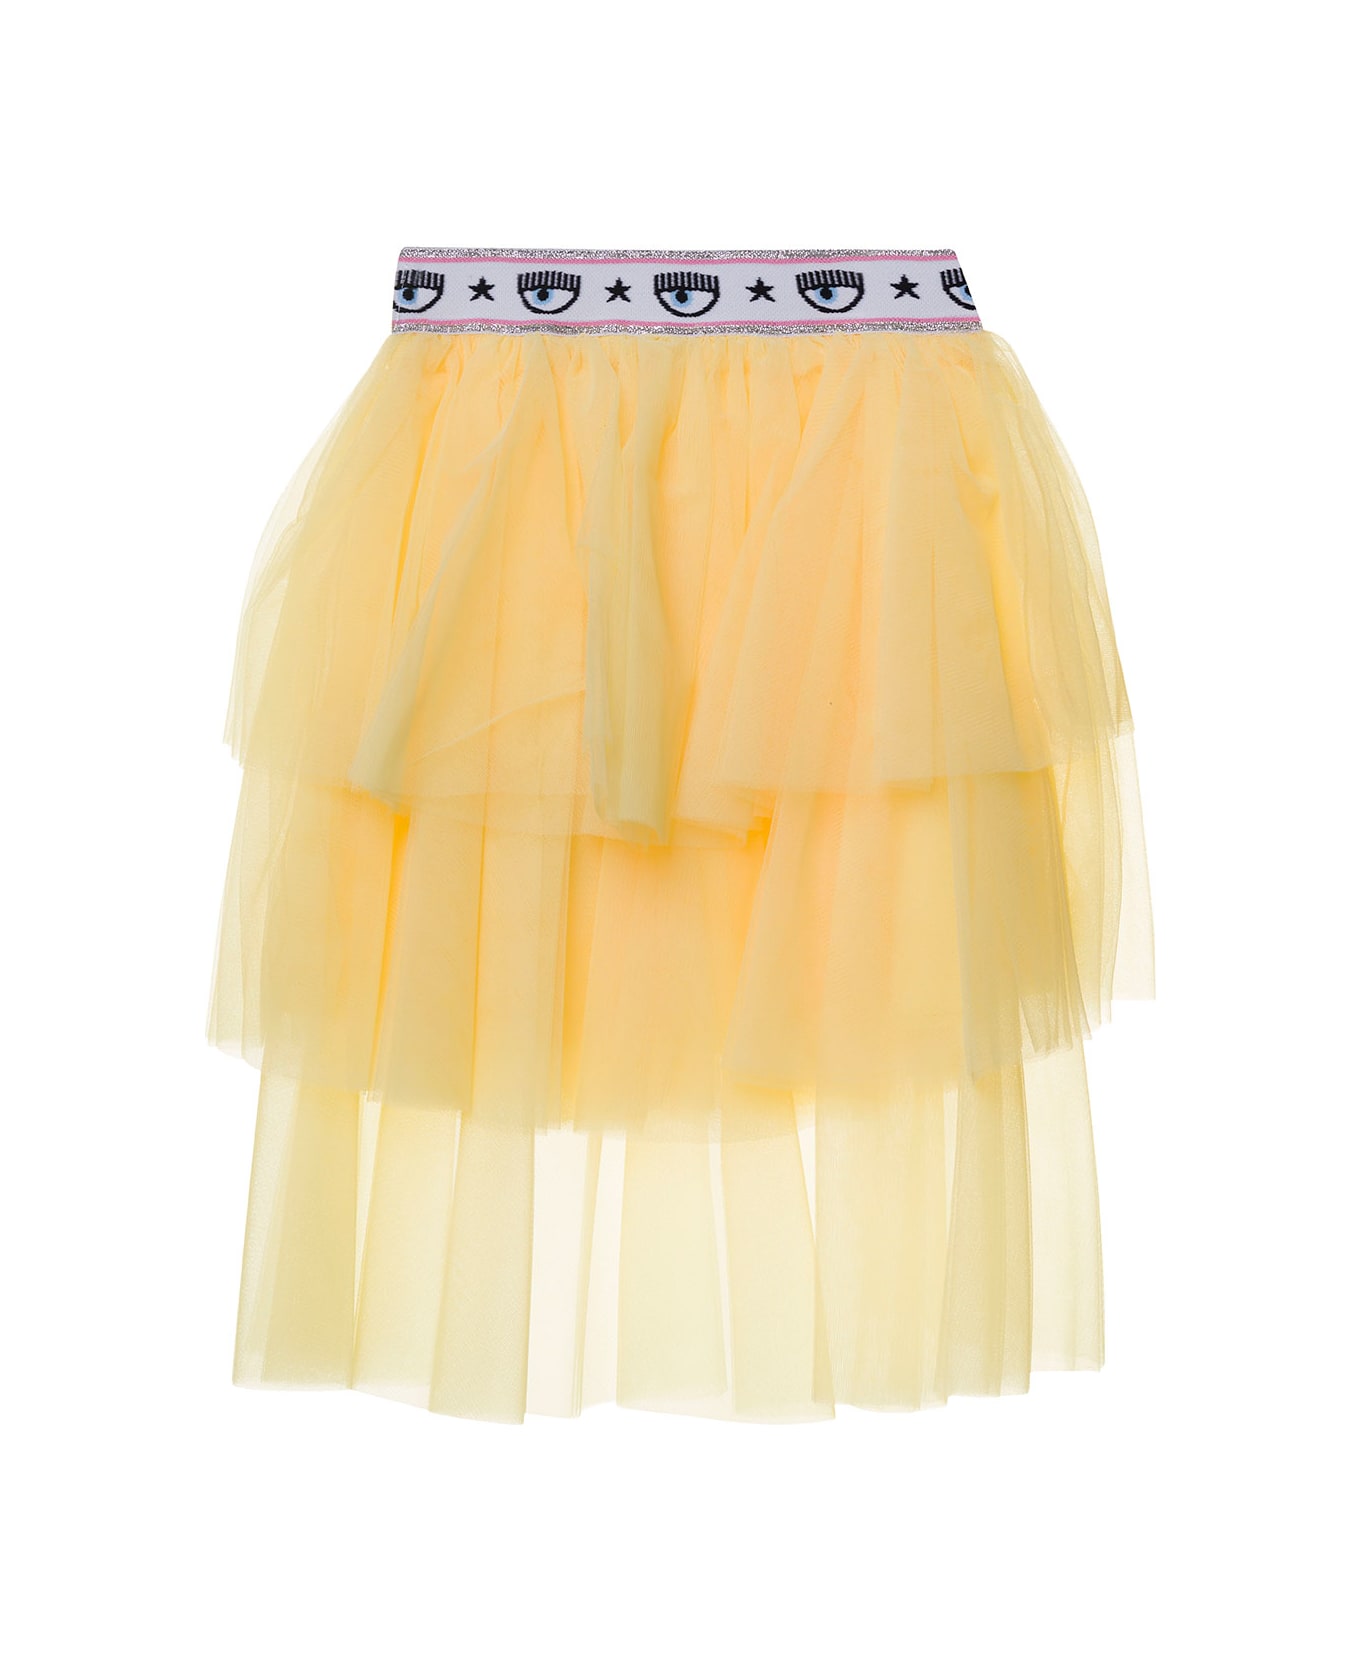 Chiara Ferragni Yellow Flounced Skirt Wih Branded Bands In Mesh Fabric Girl - Yellow